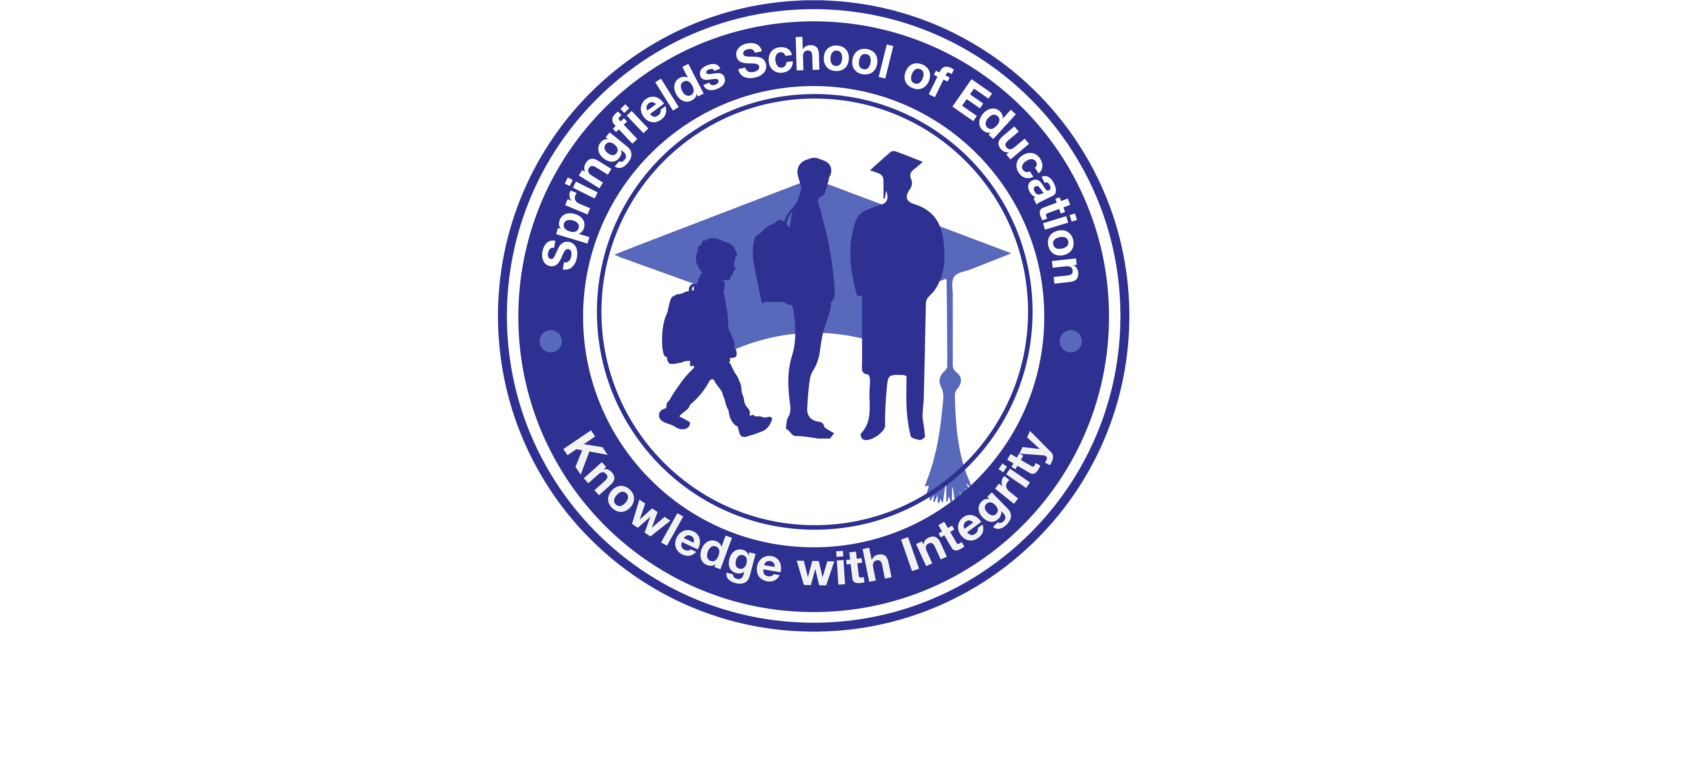 Springfields School of Education